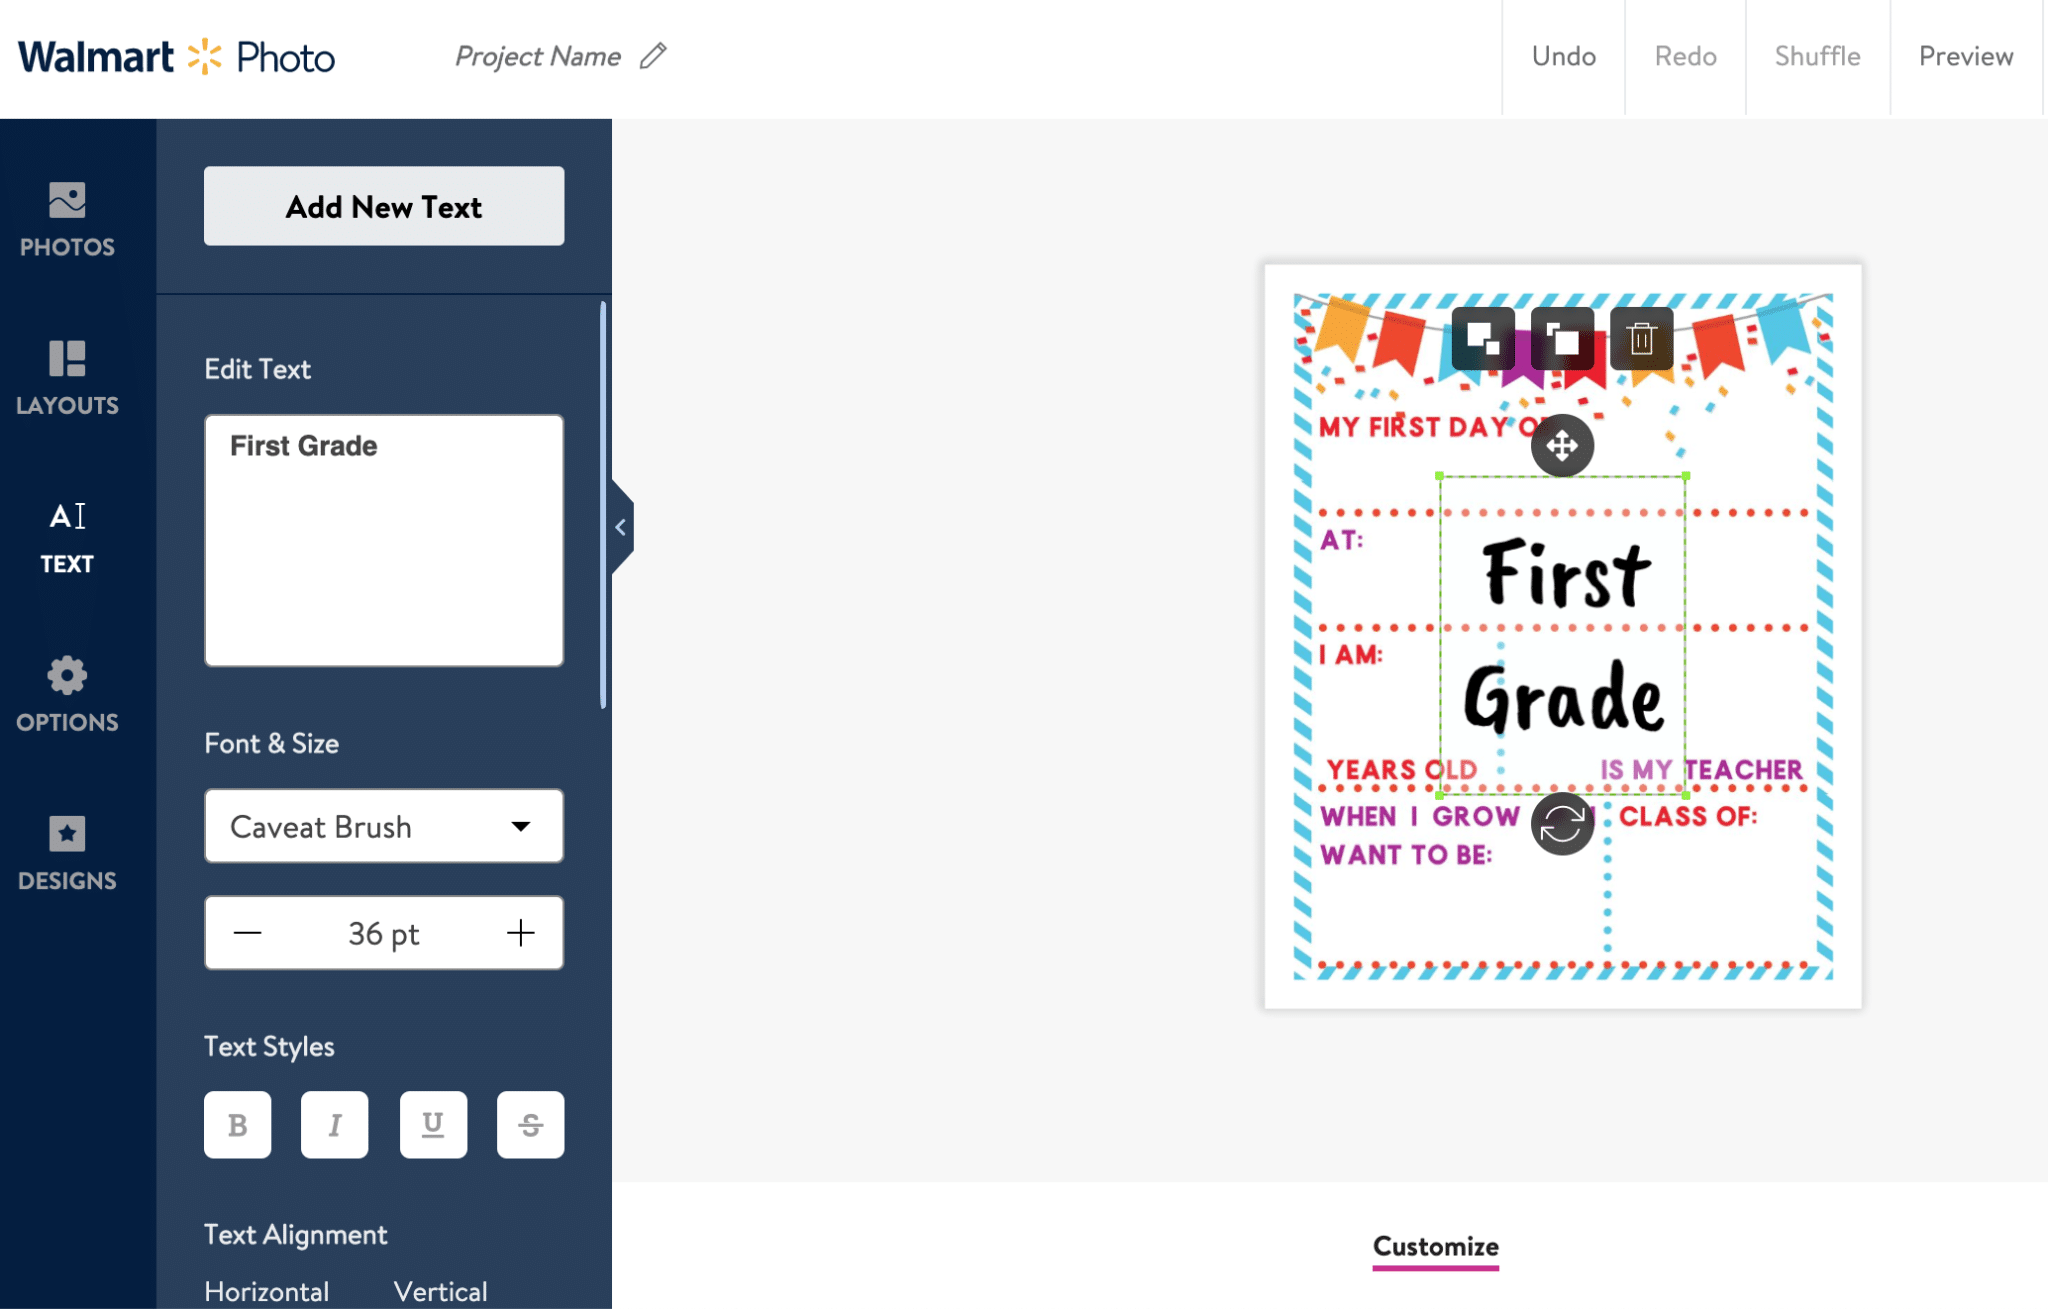 Screenshot of Walmart Photo website - customizing a back to school board print